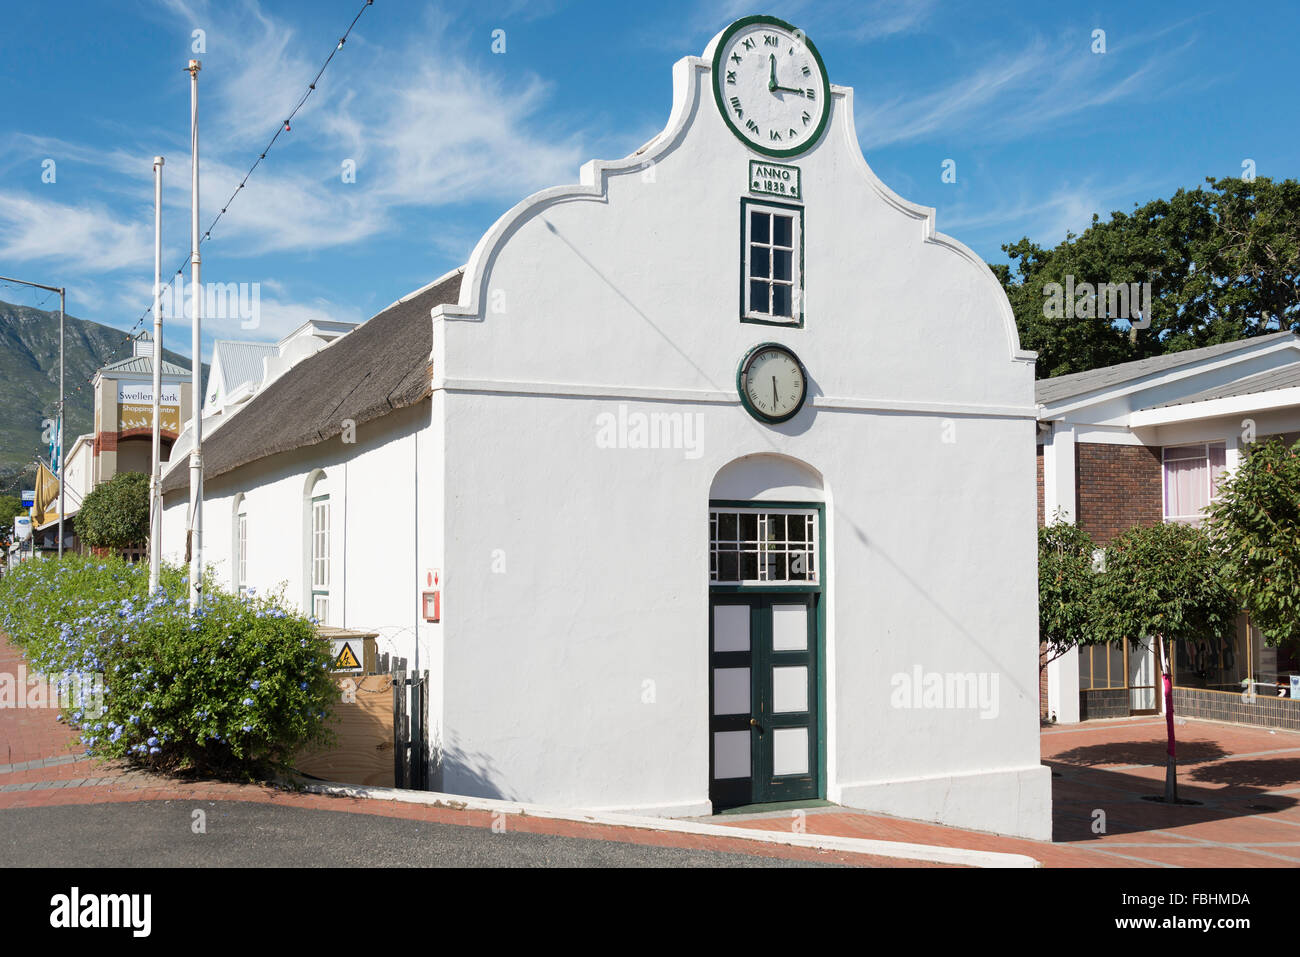 Huis Oefenings histórico (1838), Voortrek Street, Swellendam, Región de Overberg, Provincia del Cabo Occidental, Sudáfrica Foto de stock